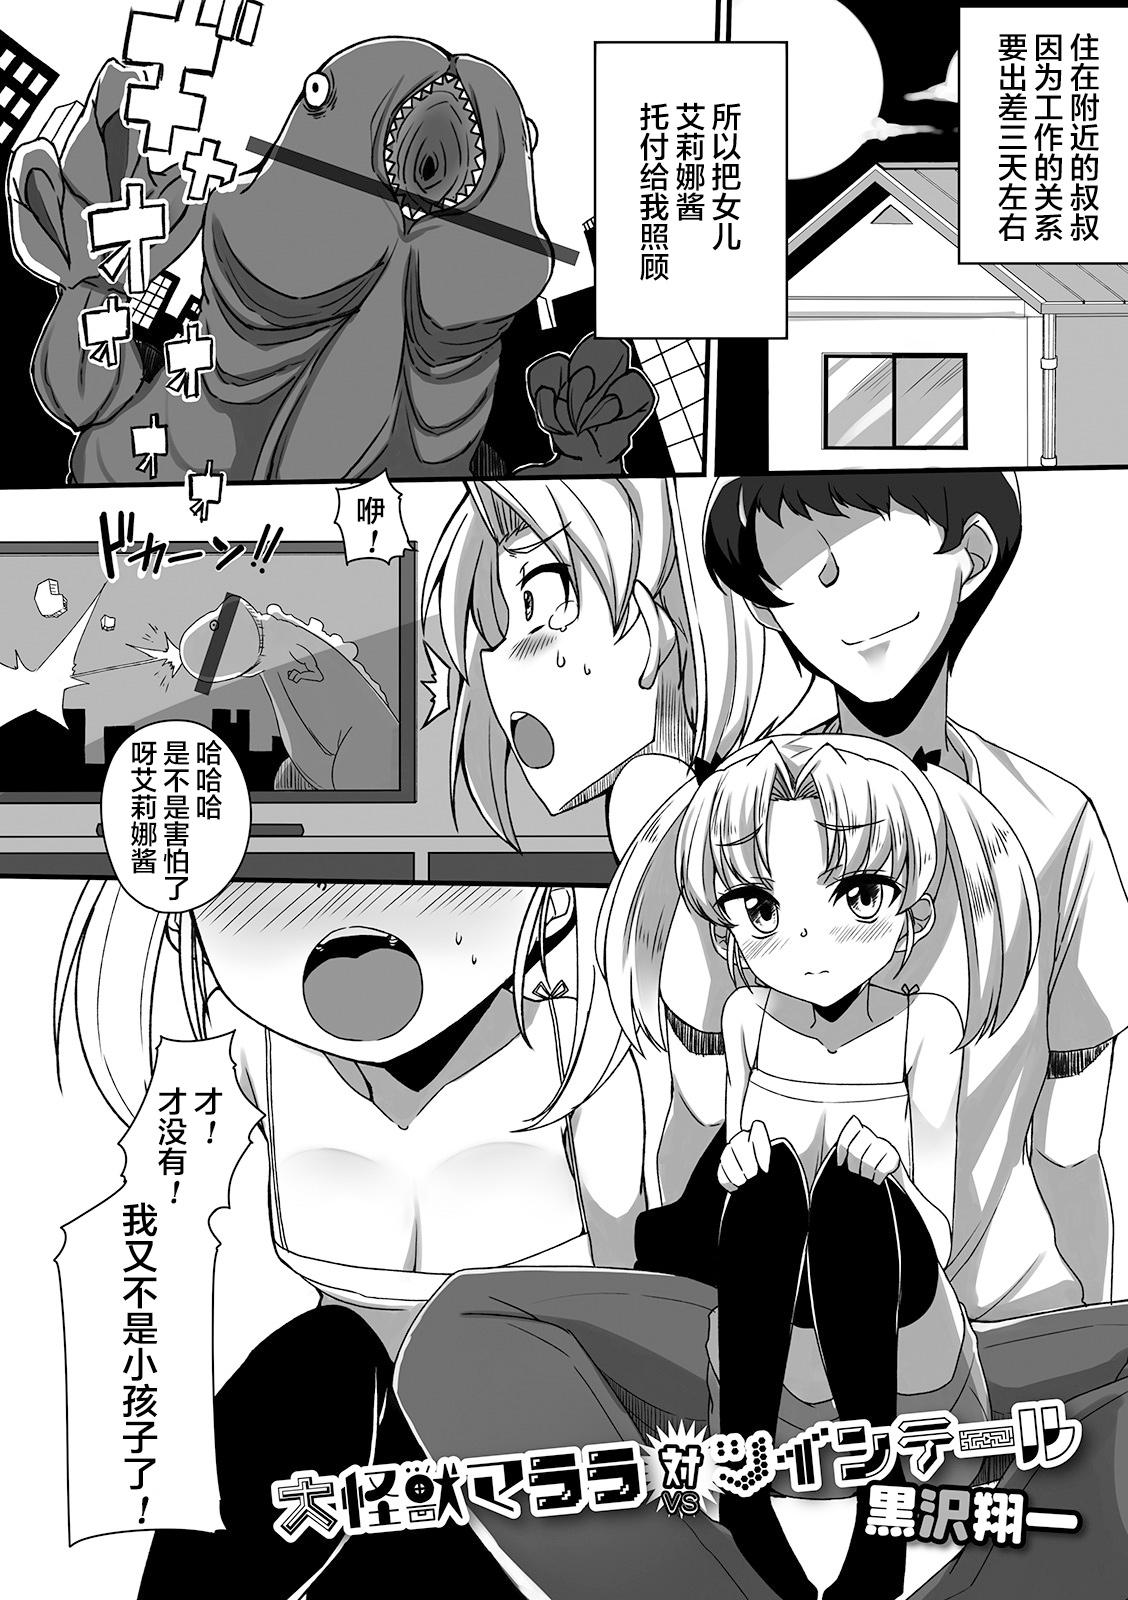 Super Daikaijuu Marara VS Twintail - Original Chick - Page 2